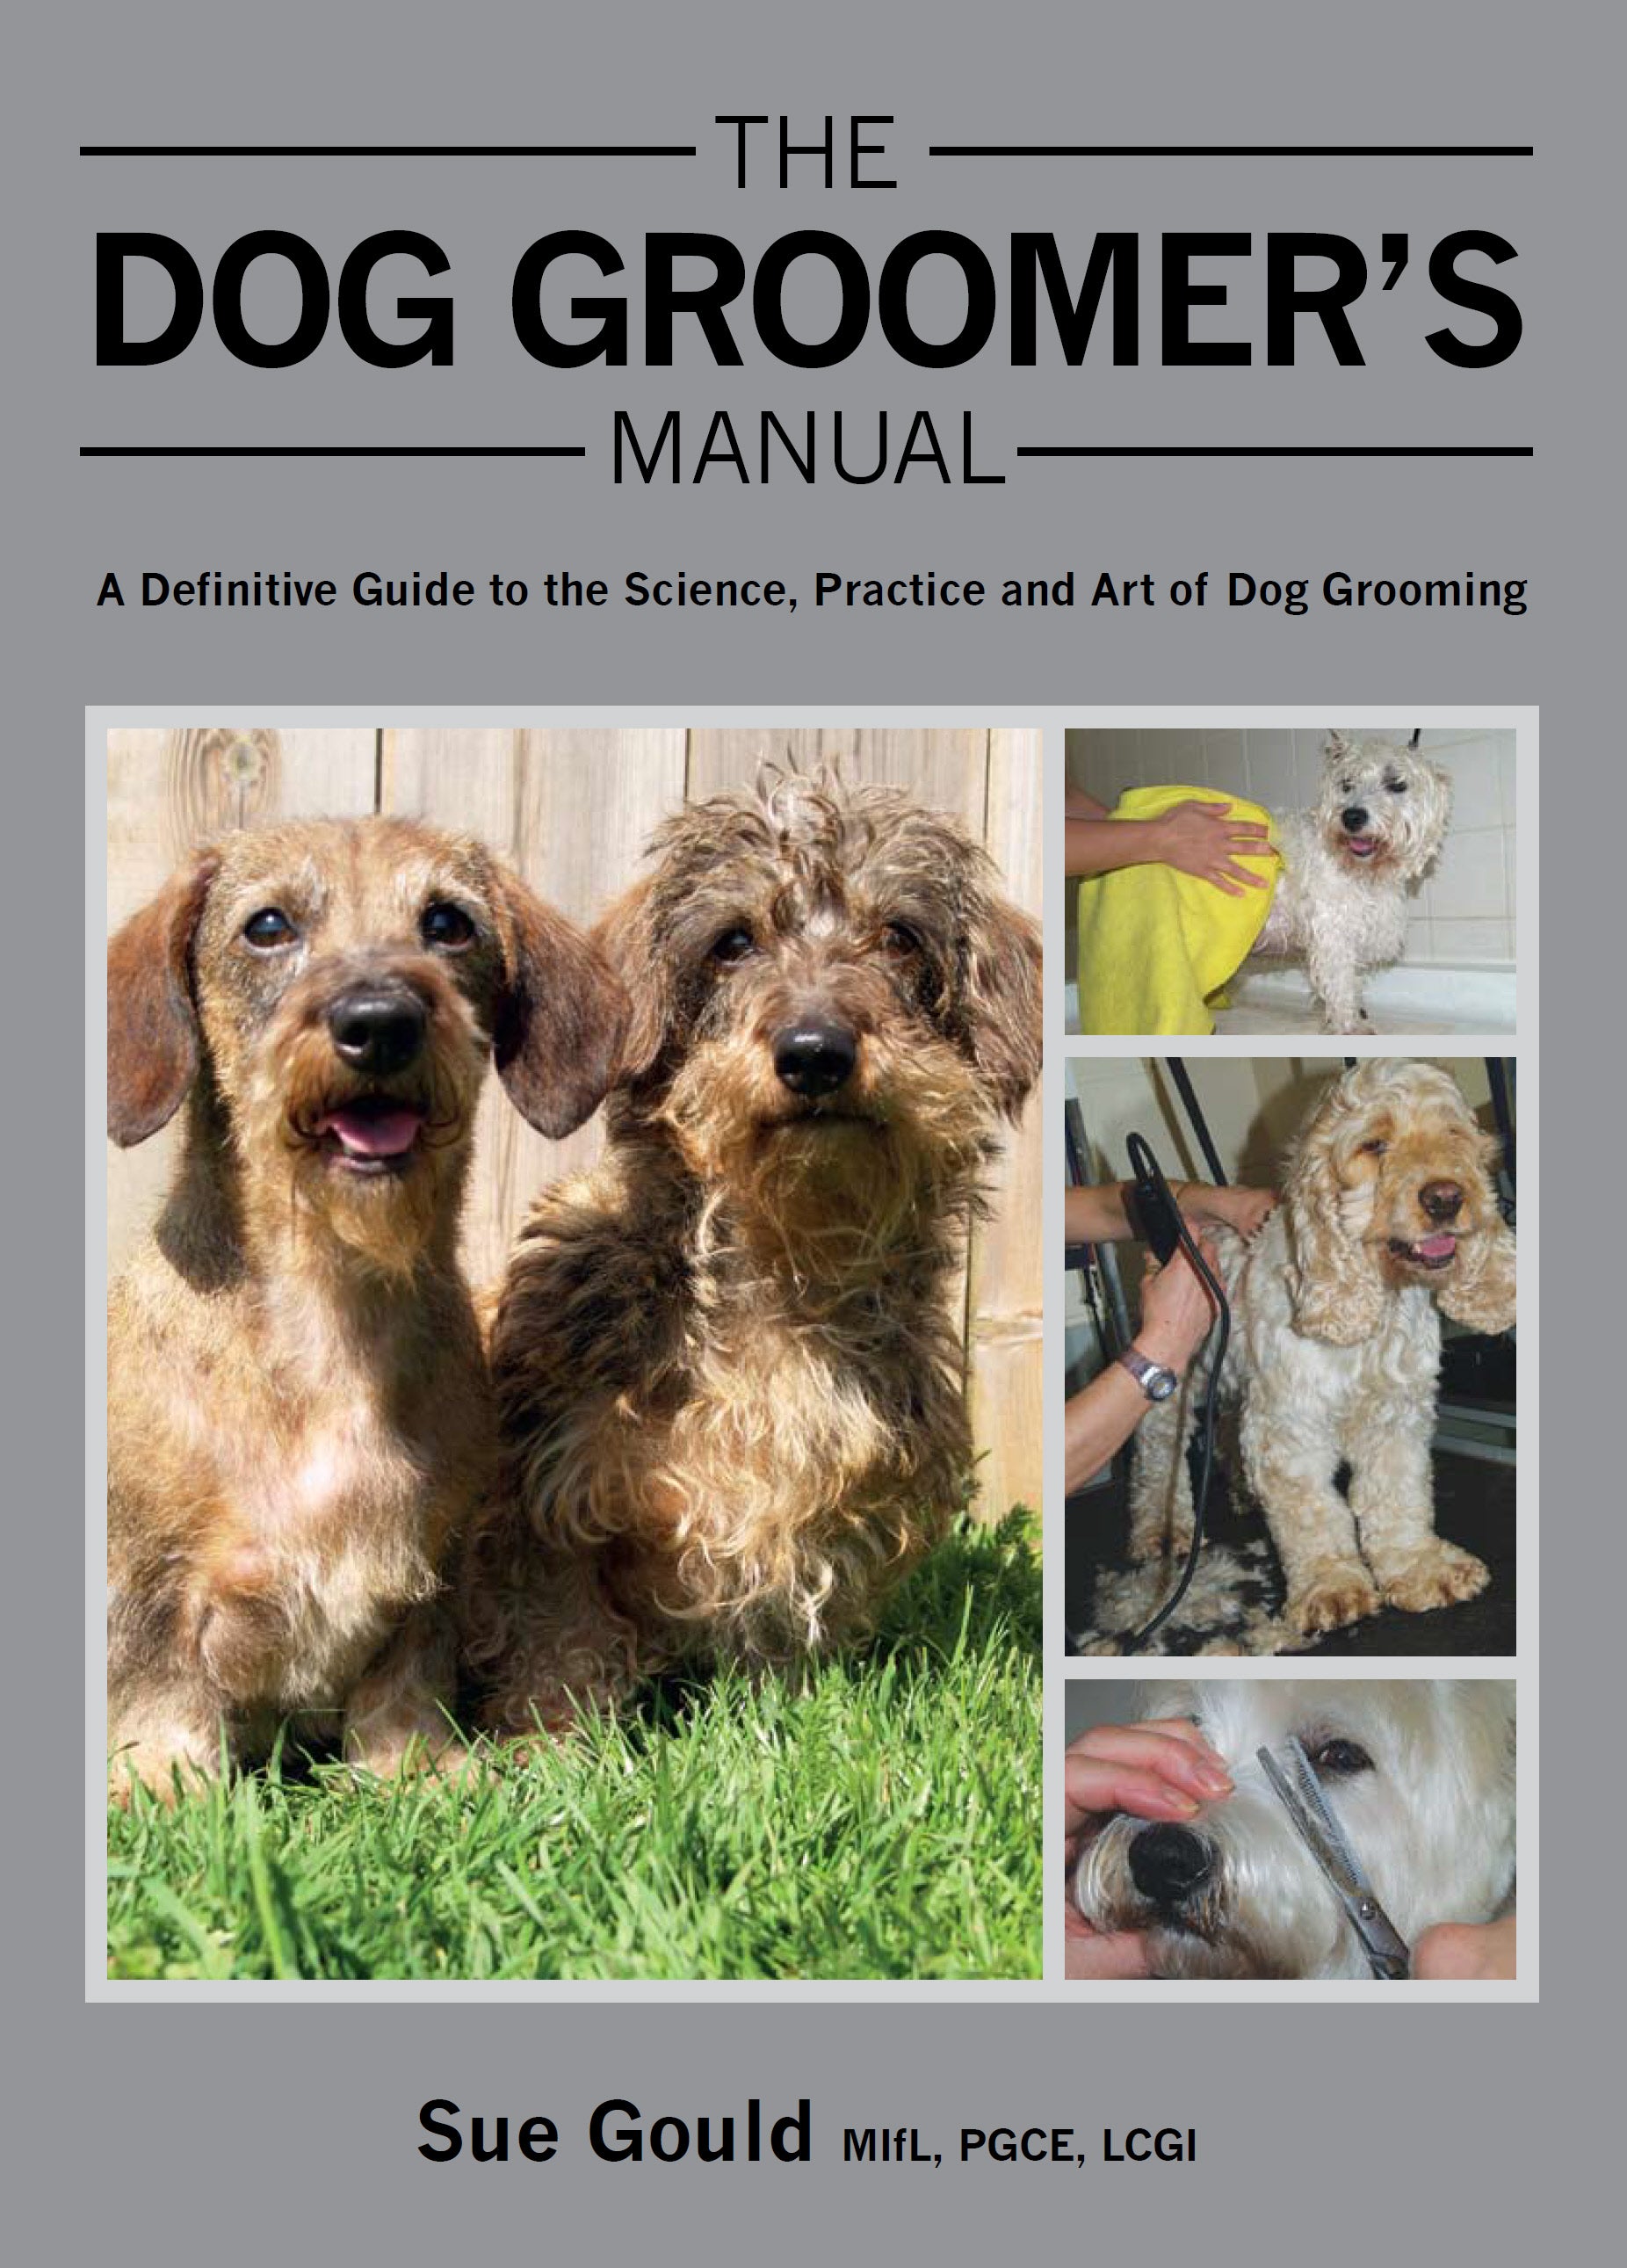 The Dog Groomer's Manual